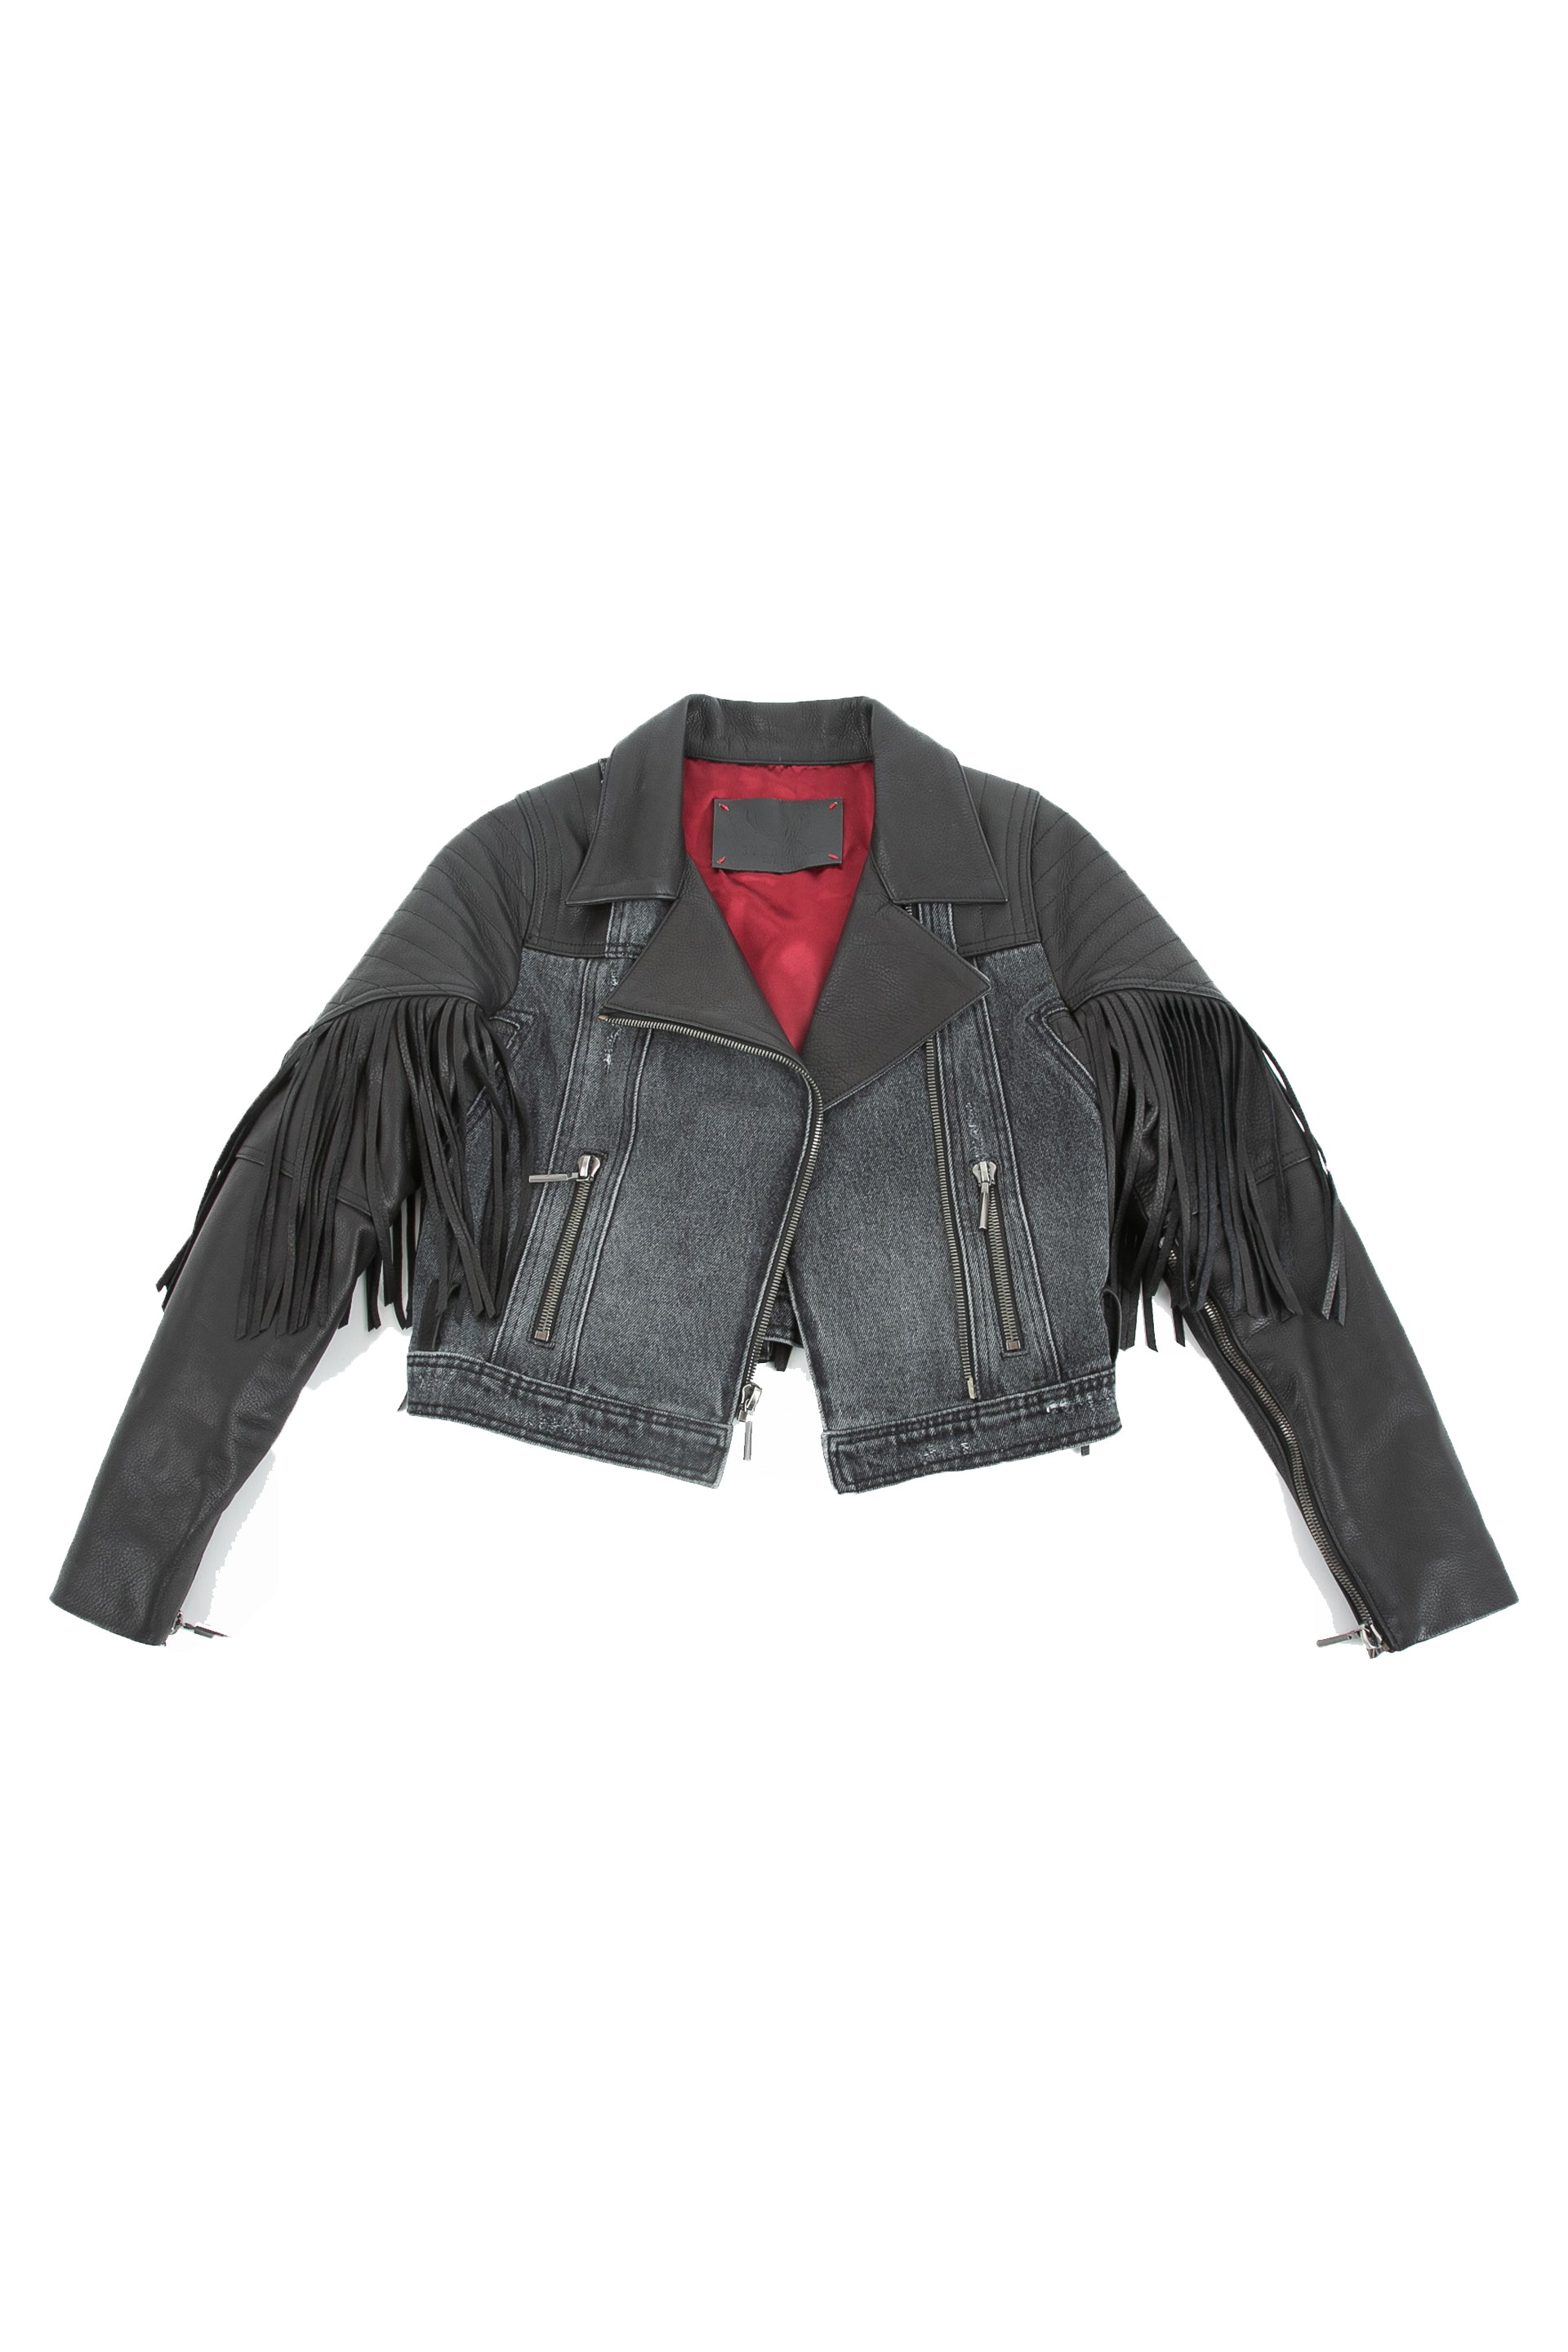 Front of La Matadora leather jacket